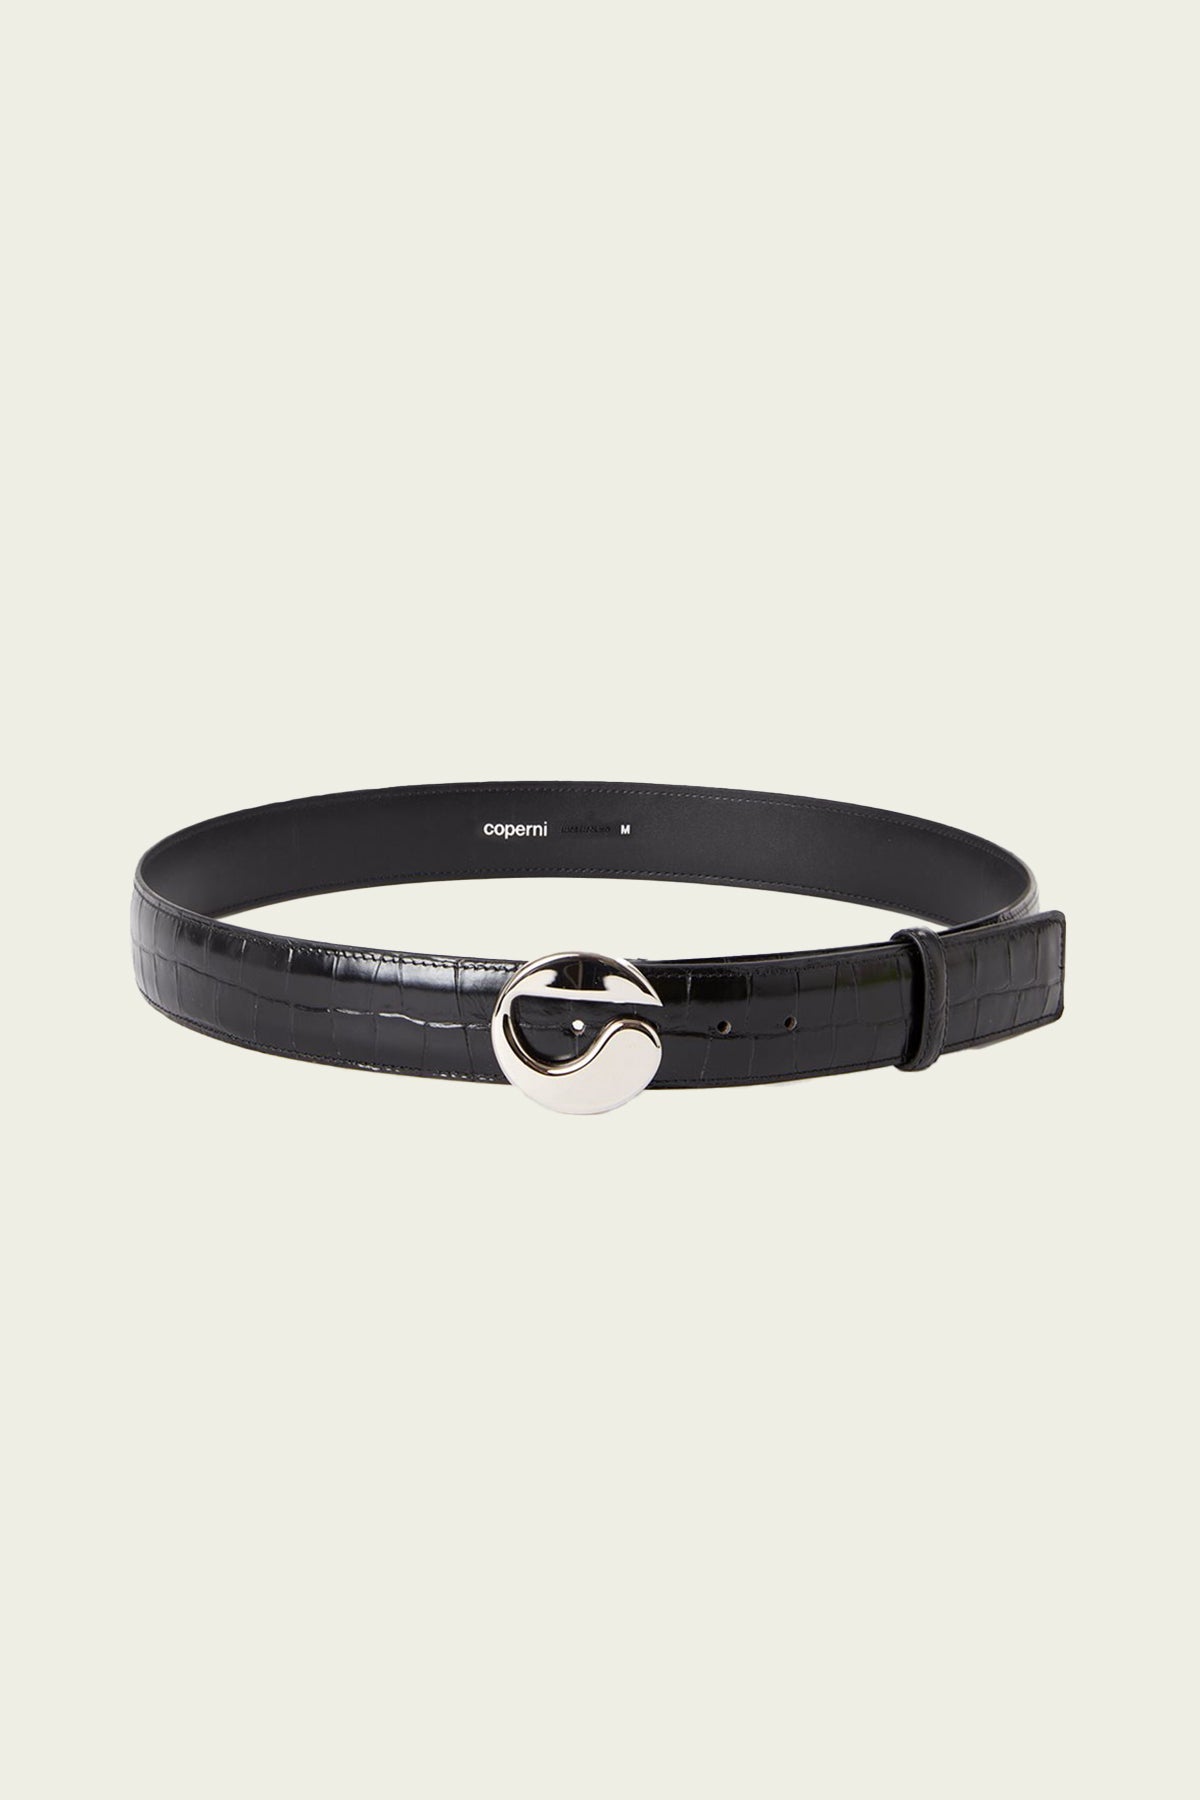 Croco Coperni Logo Leather Belt in Black - shop-olivia.com